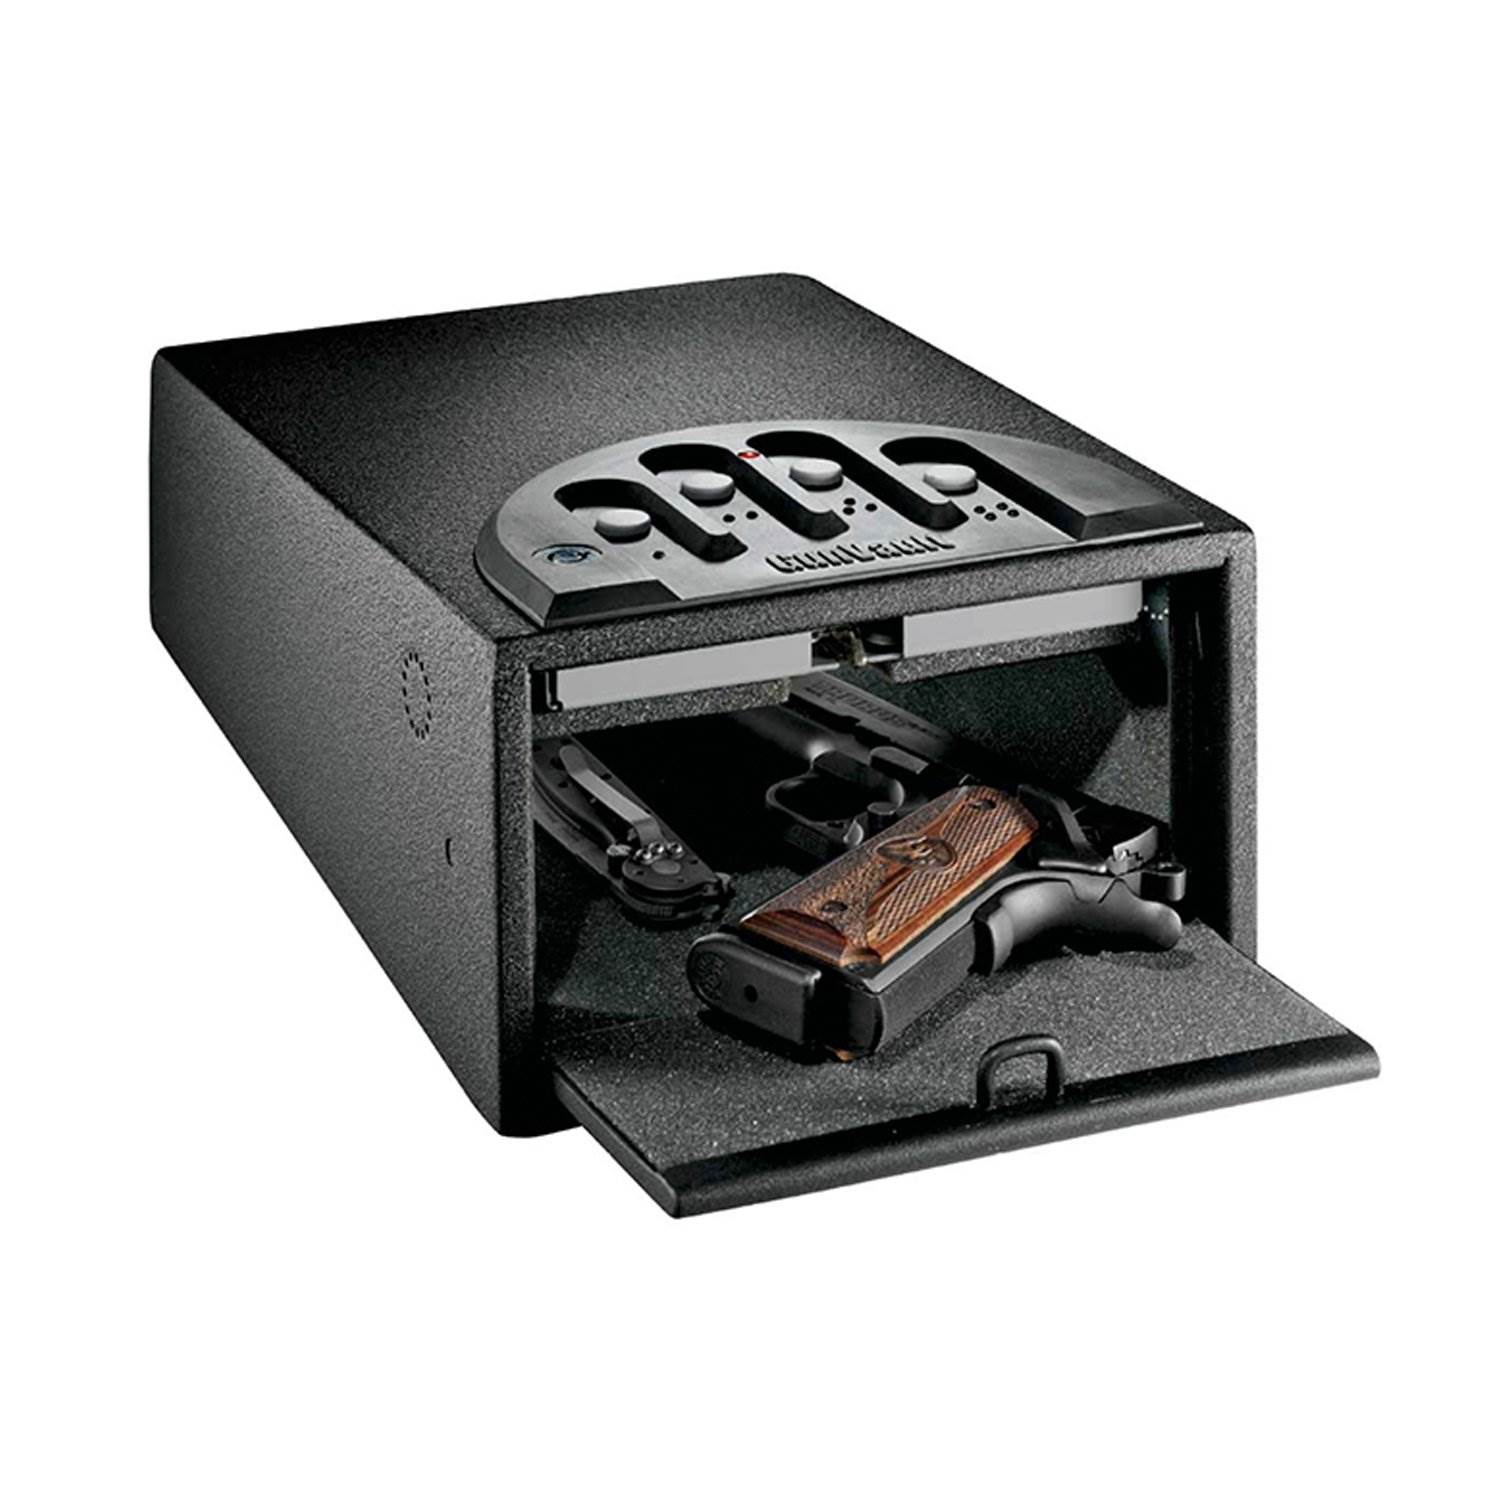 GunVault MiniVault Standard Electronic Steel Handgun & Valuables Lock Box Safe - image 1 of 6